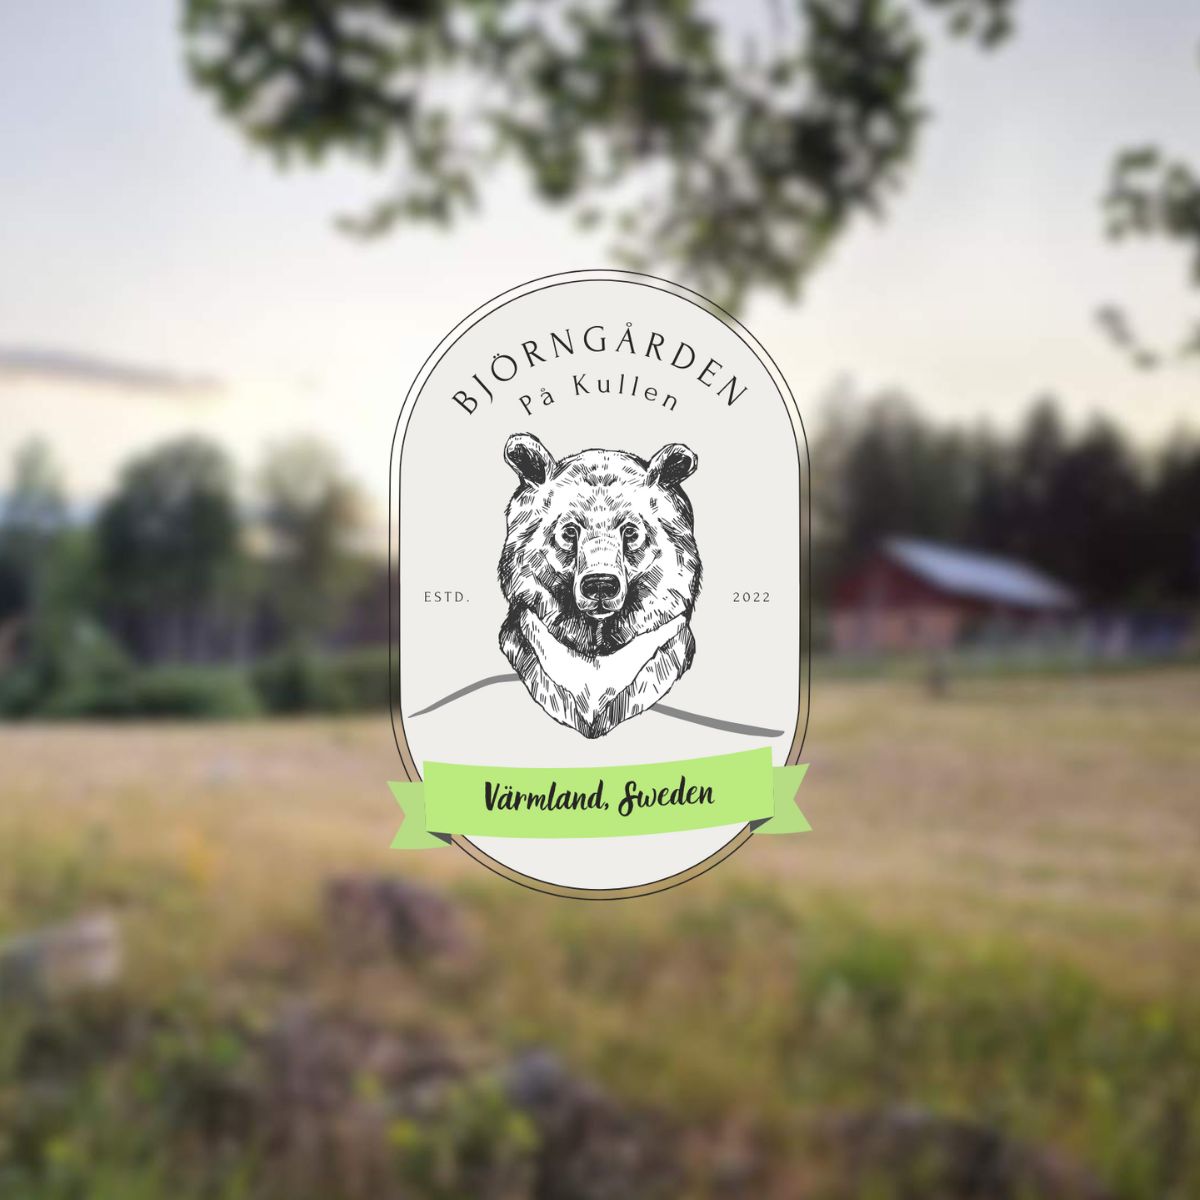 Simple Logodesign for an ecofarm in sweden